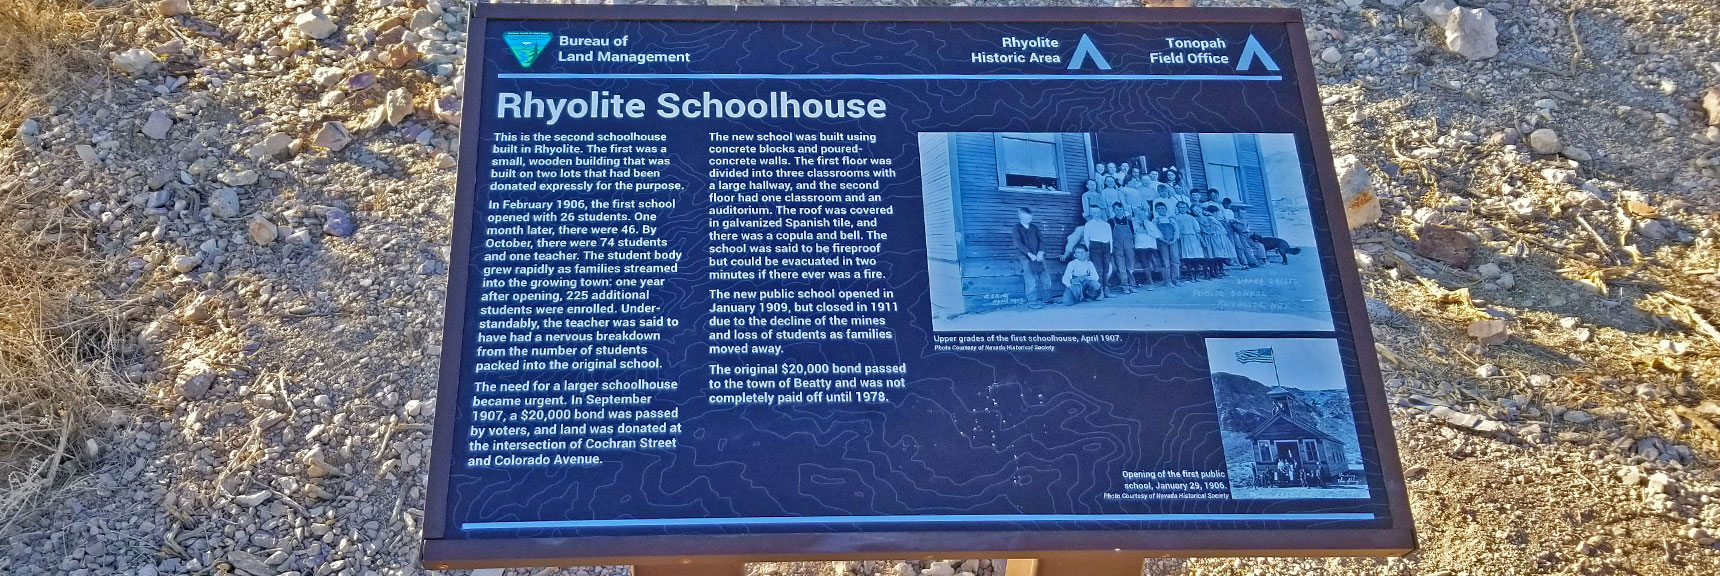 Rhyolite Schoolhouse Interpretive Sign | Rhyolite Ghost Town | Death Valley Area, Nevada